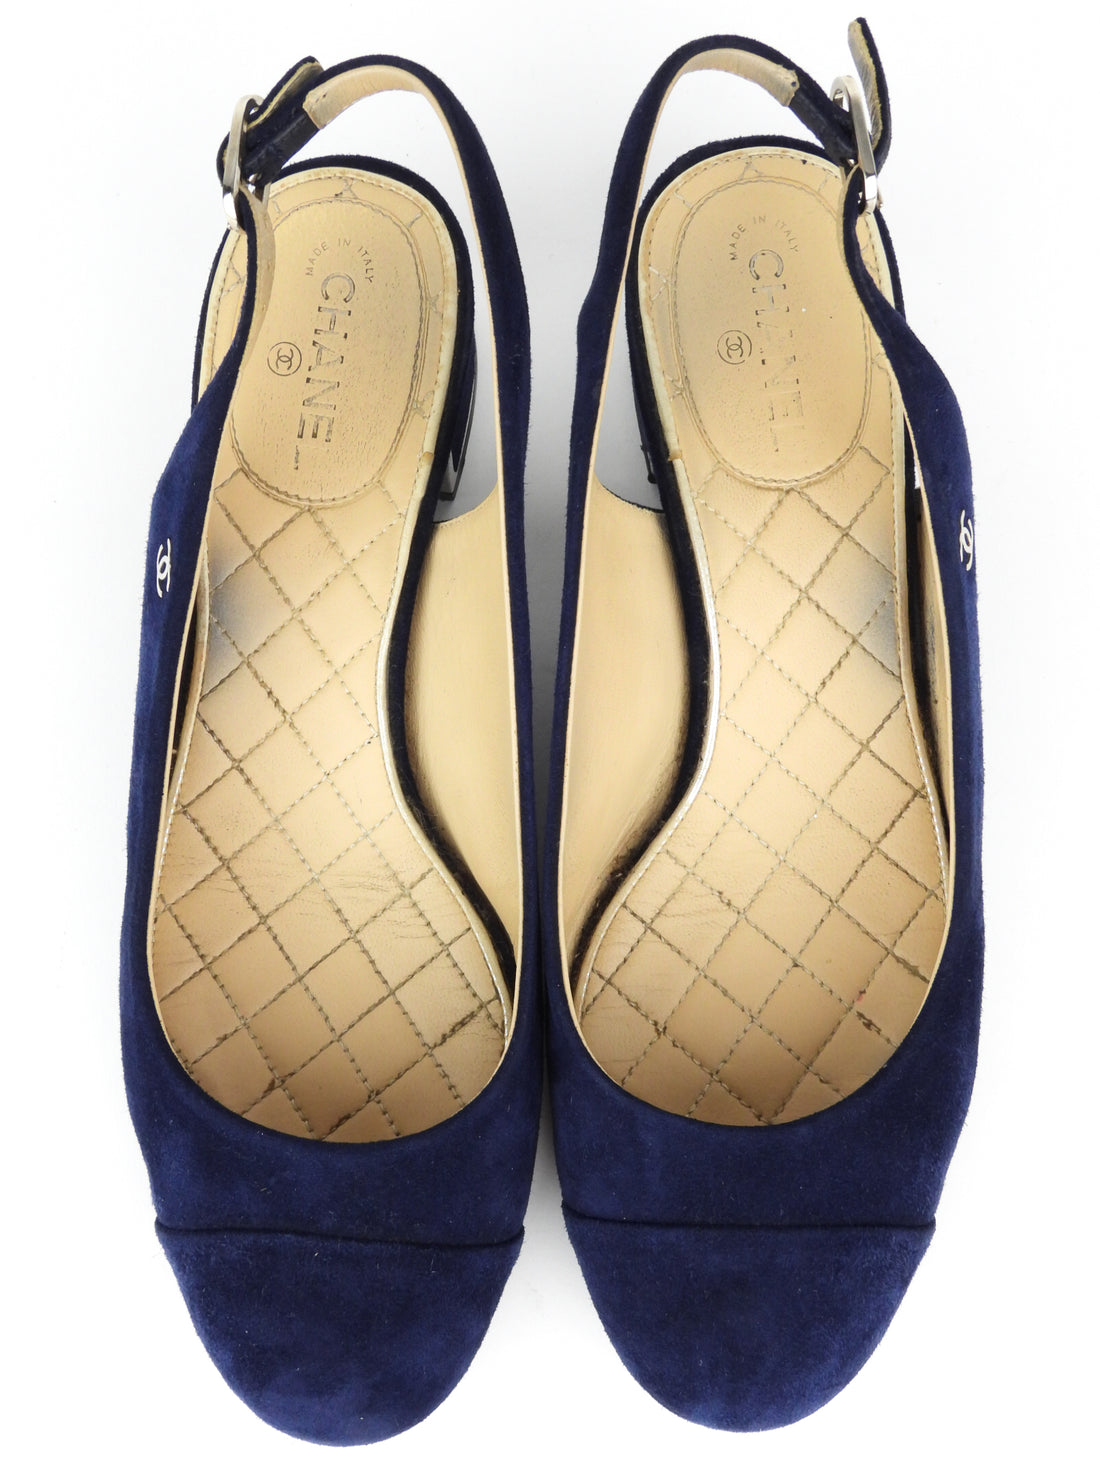 Chanel CC Blue Suede Leather Cap Toe Block Heel Slingback Shoes